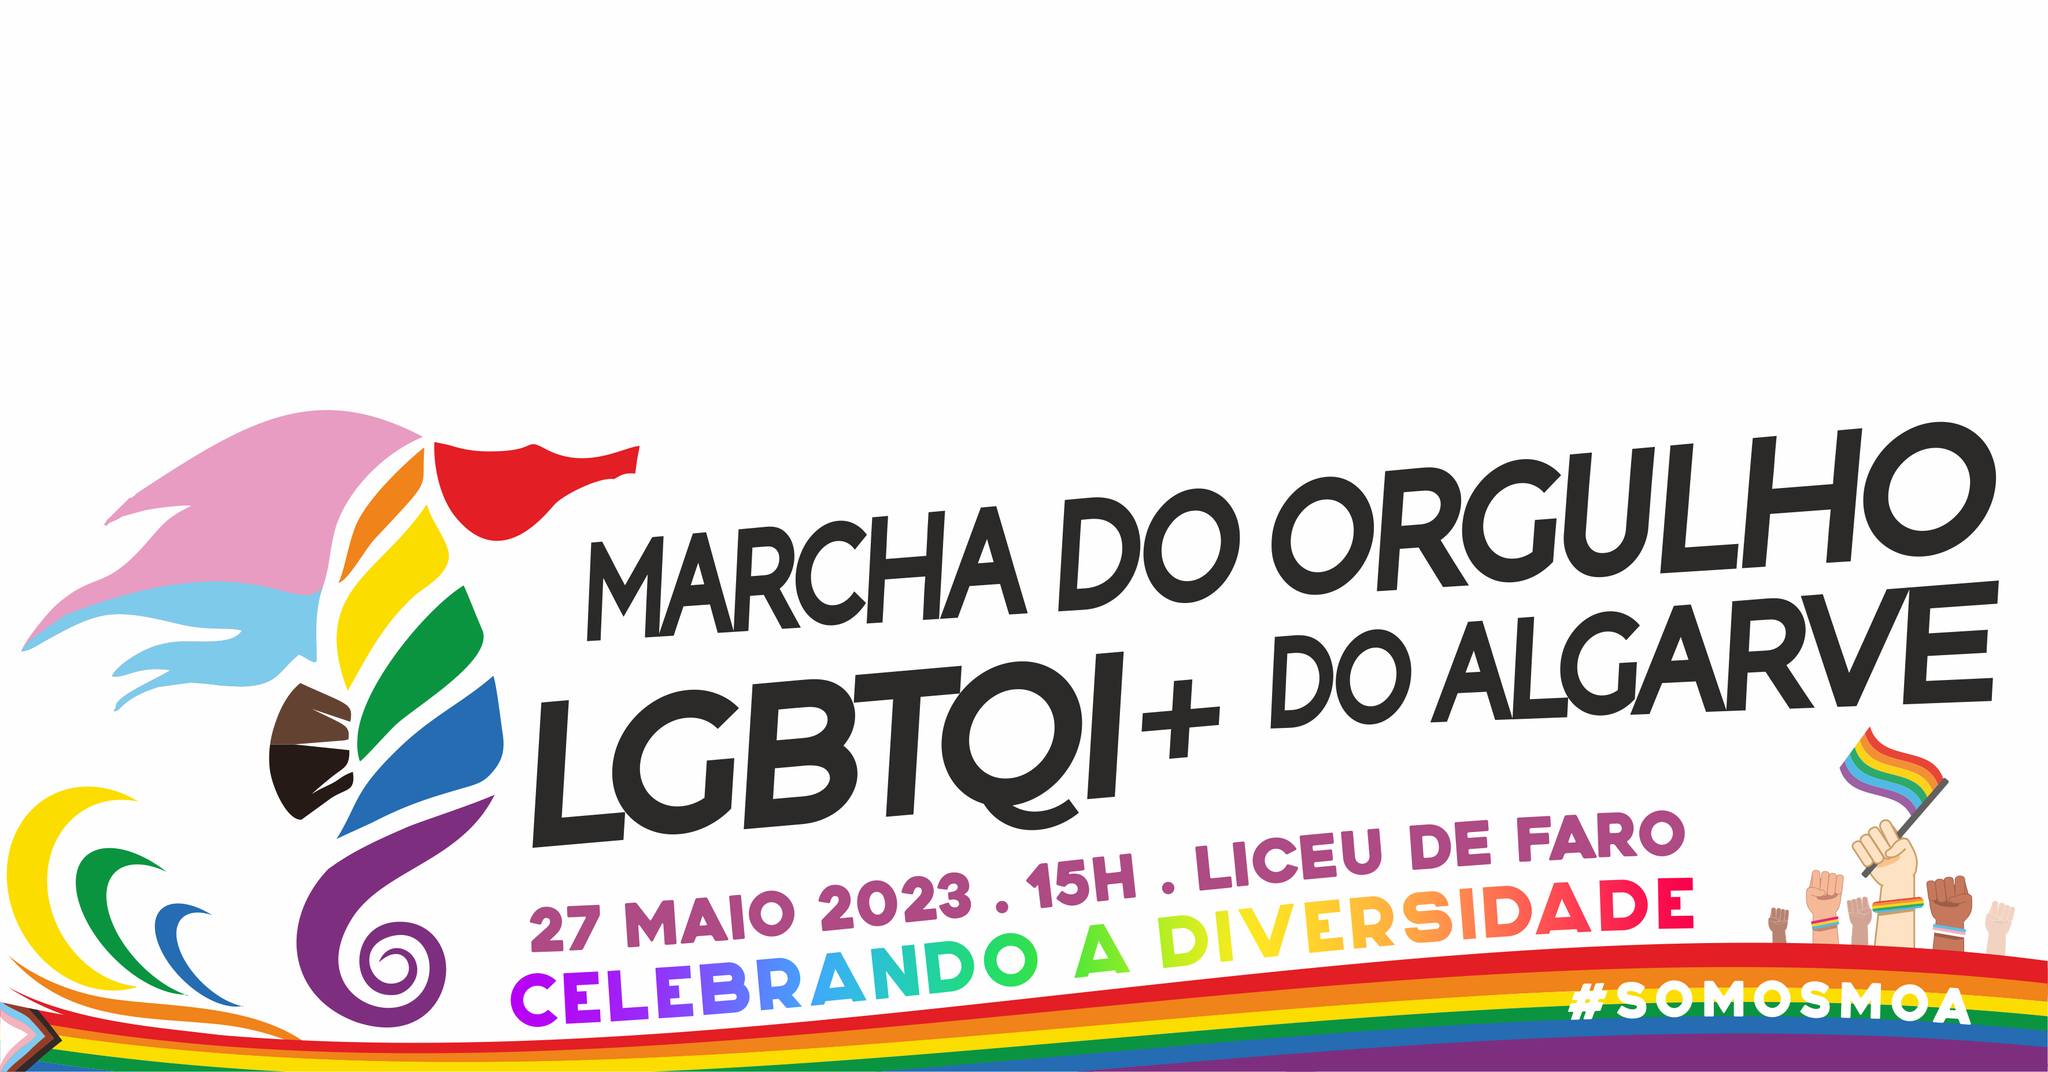 Marcha Orgulho Lgbtqi+ Algarve 2023